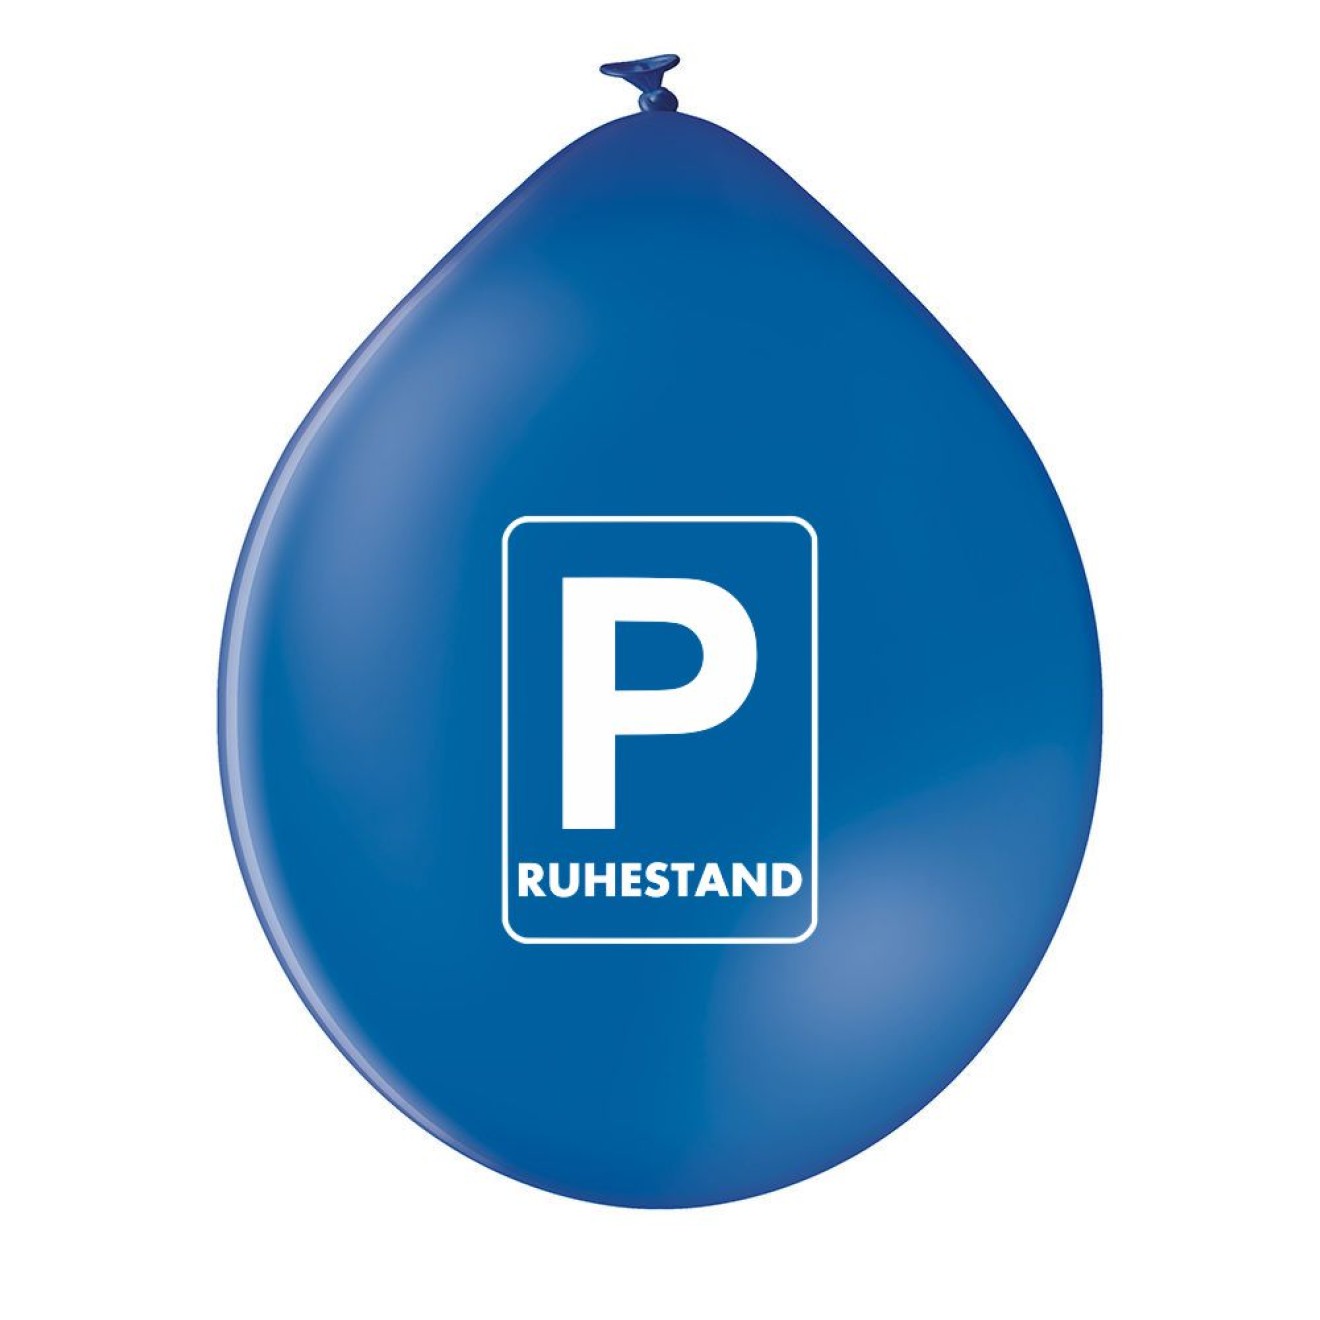 Luftballons Ruhestand - Verkehrsschild Blau - Ø 30 cm